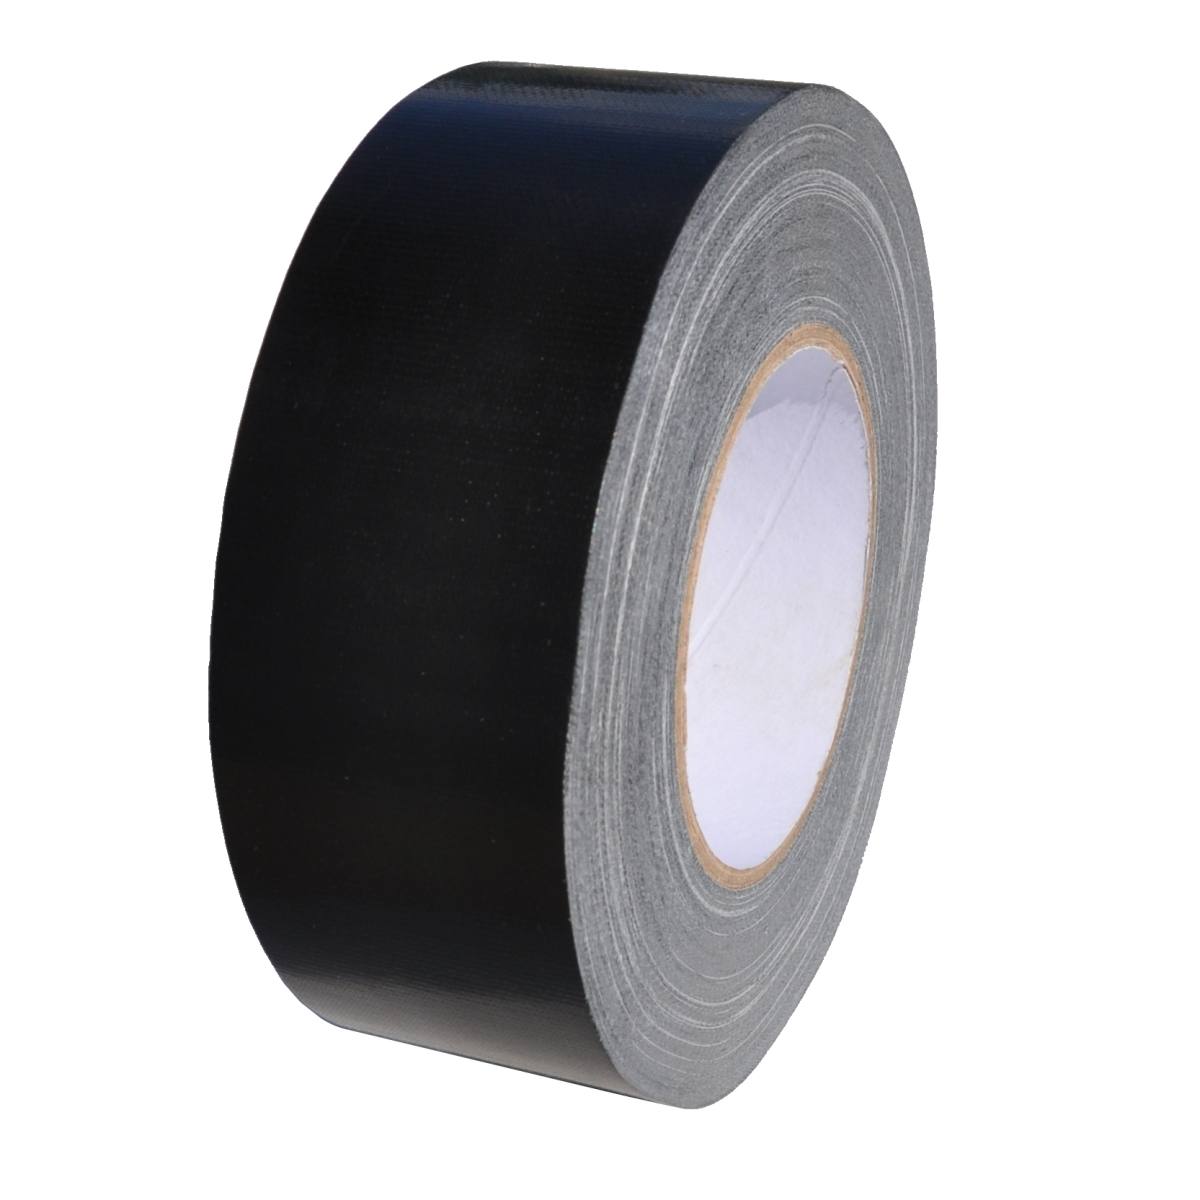 S-K-S 990 Fabric tape 75mmx50m black